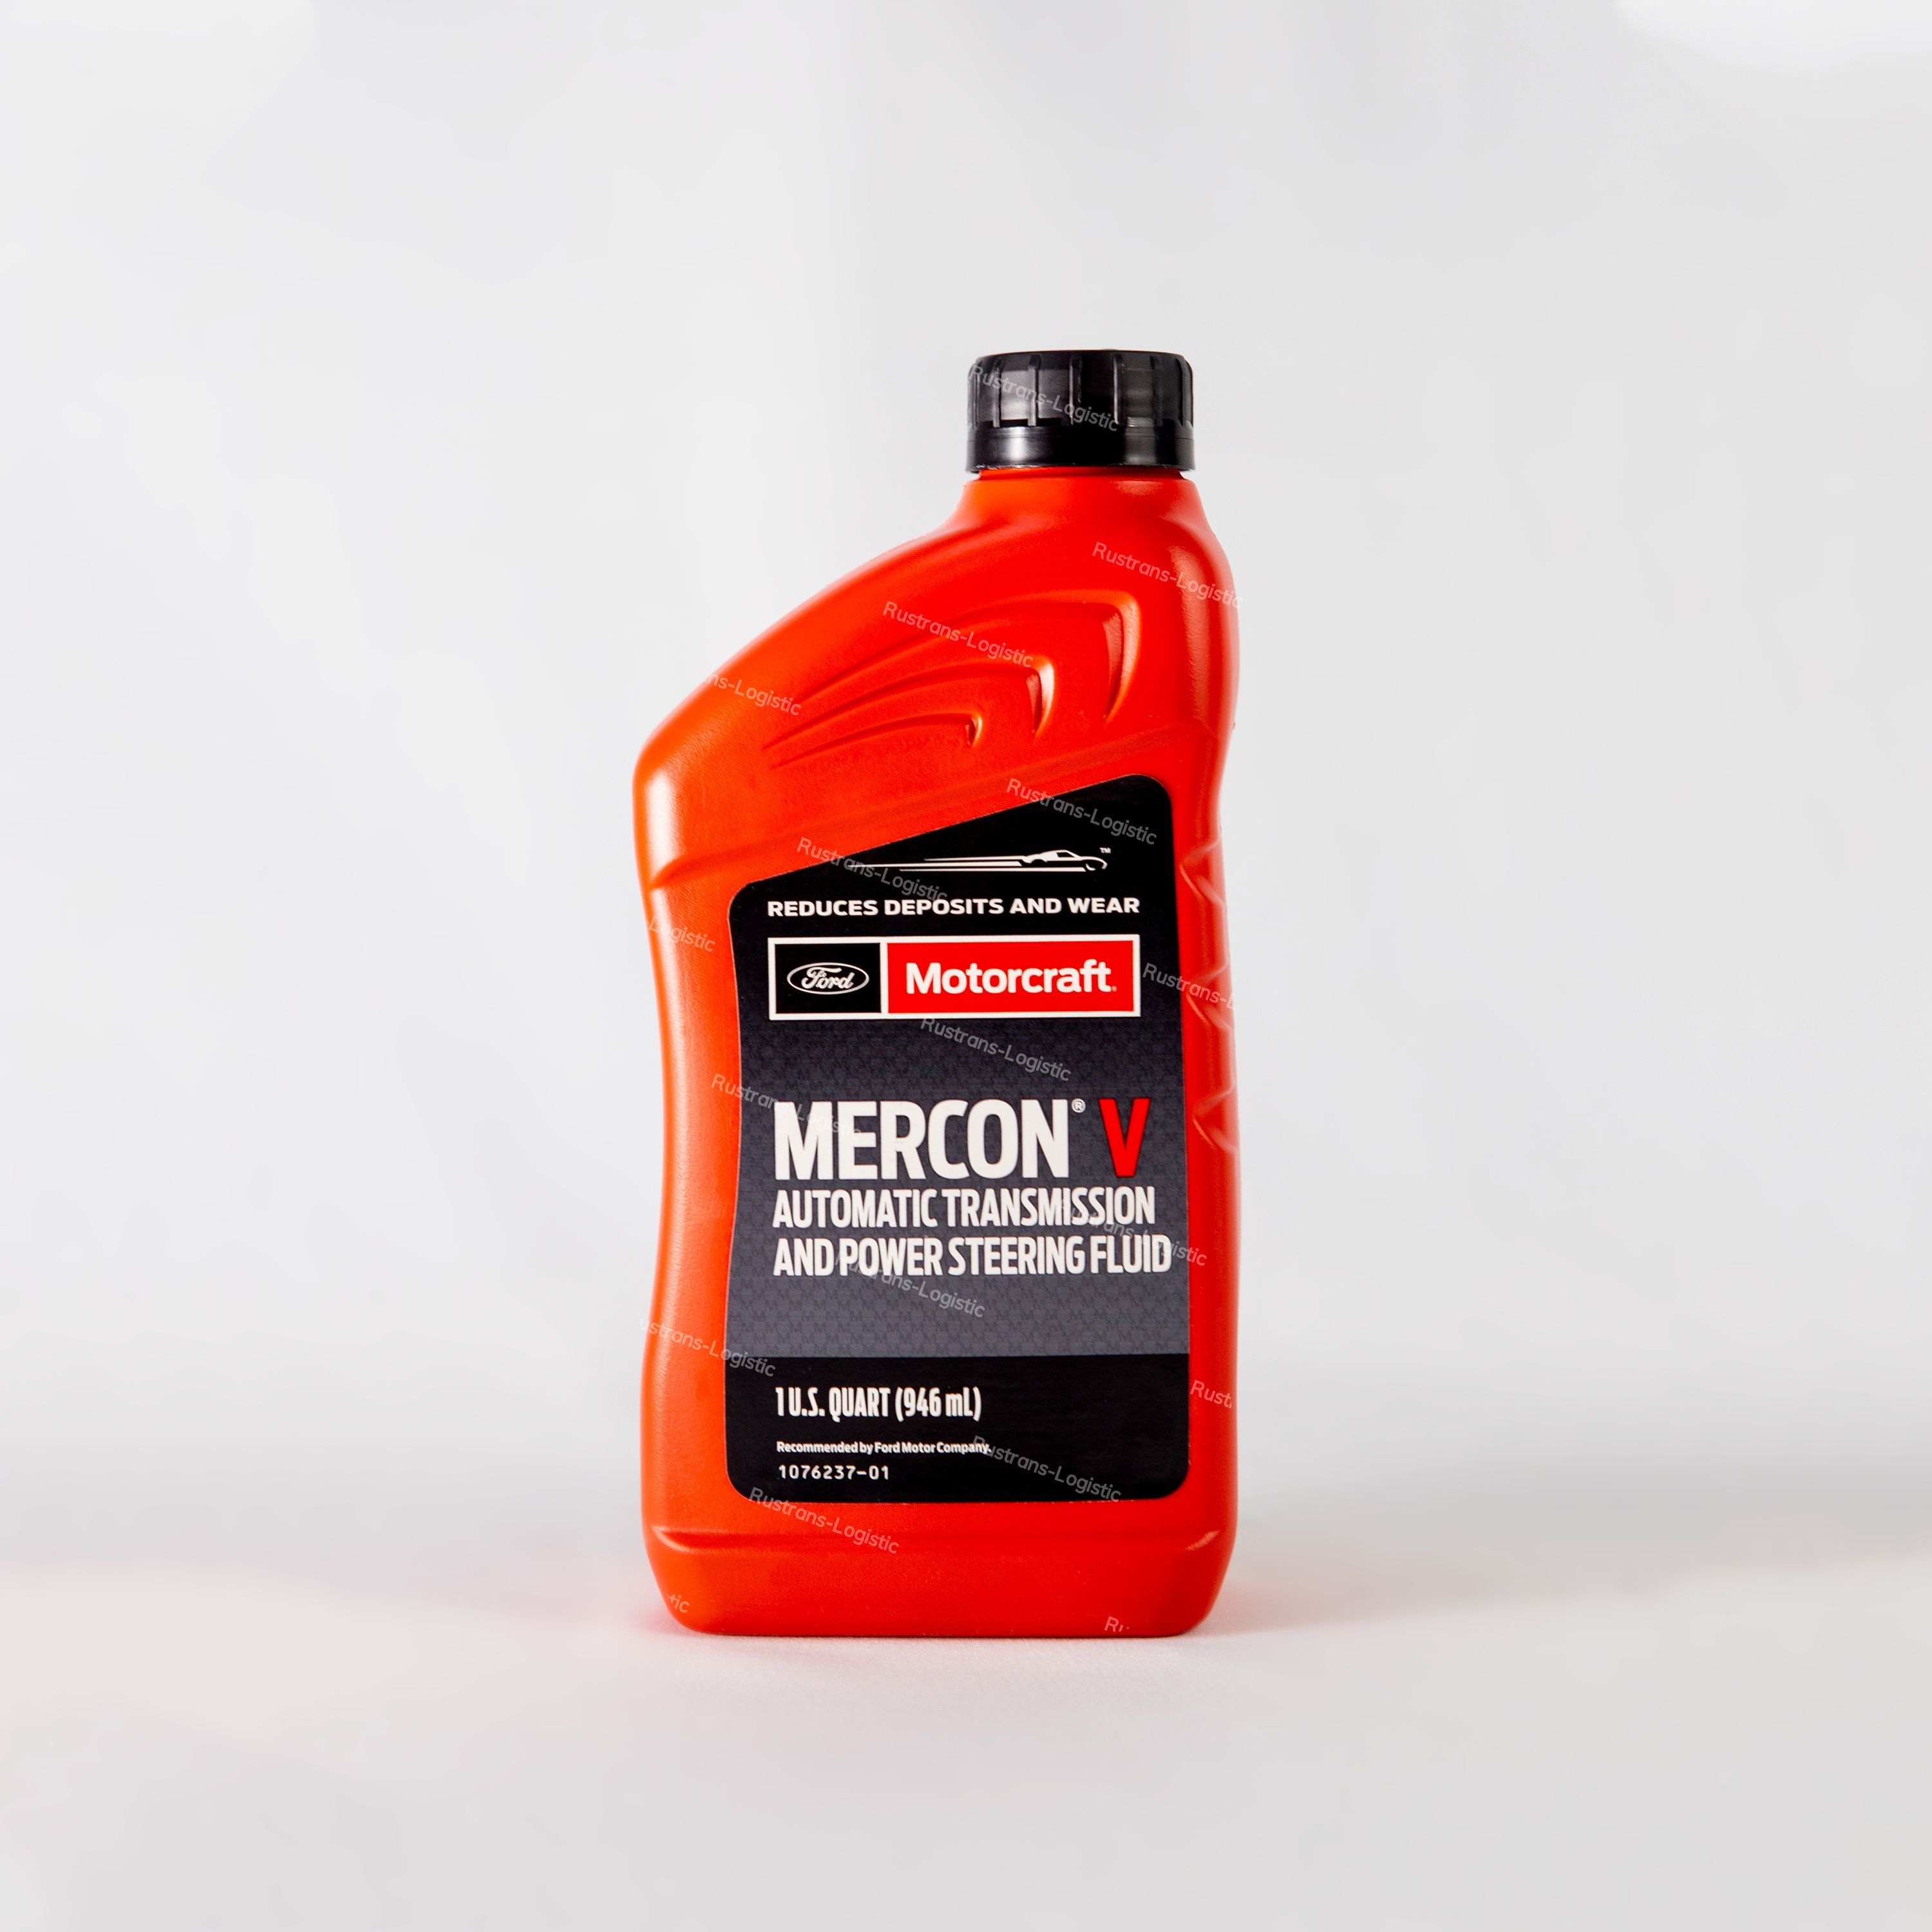 Mercon lv atf. Ford Mercon lv артикул 1л. Motorcraft Mercon v. Как выглядит канистра Motorcraft Mercon 4.73.